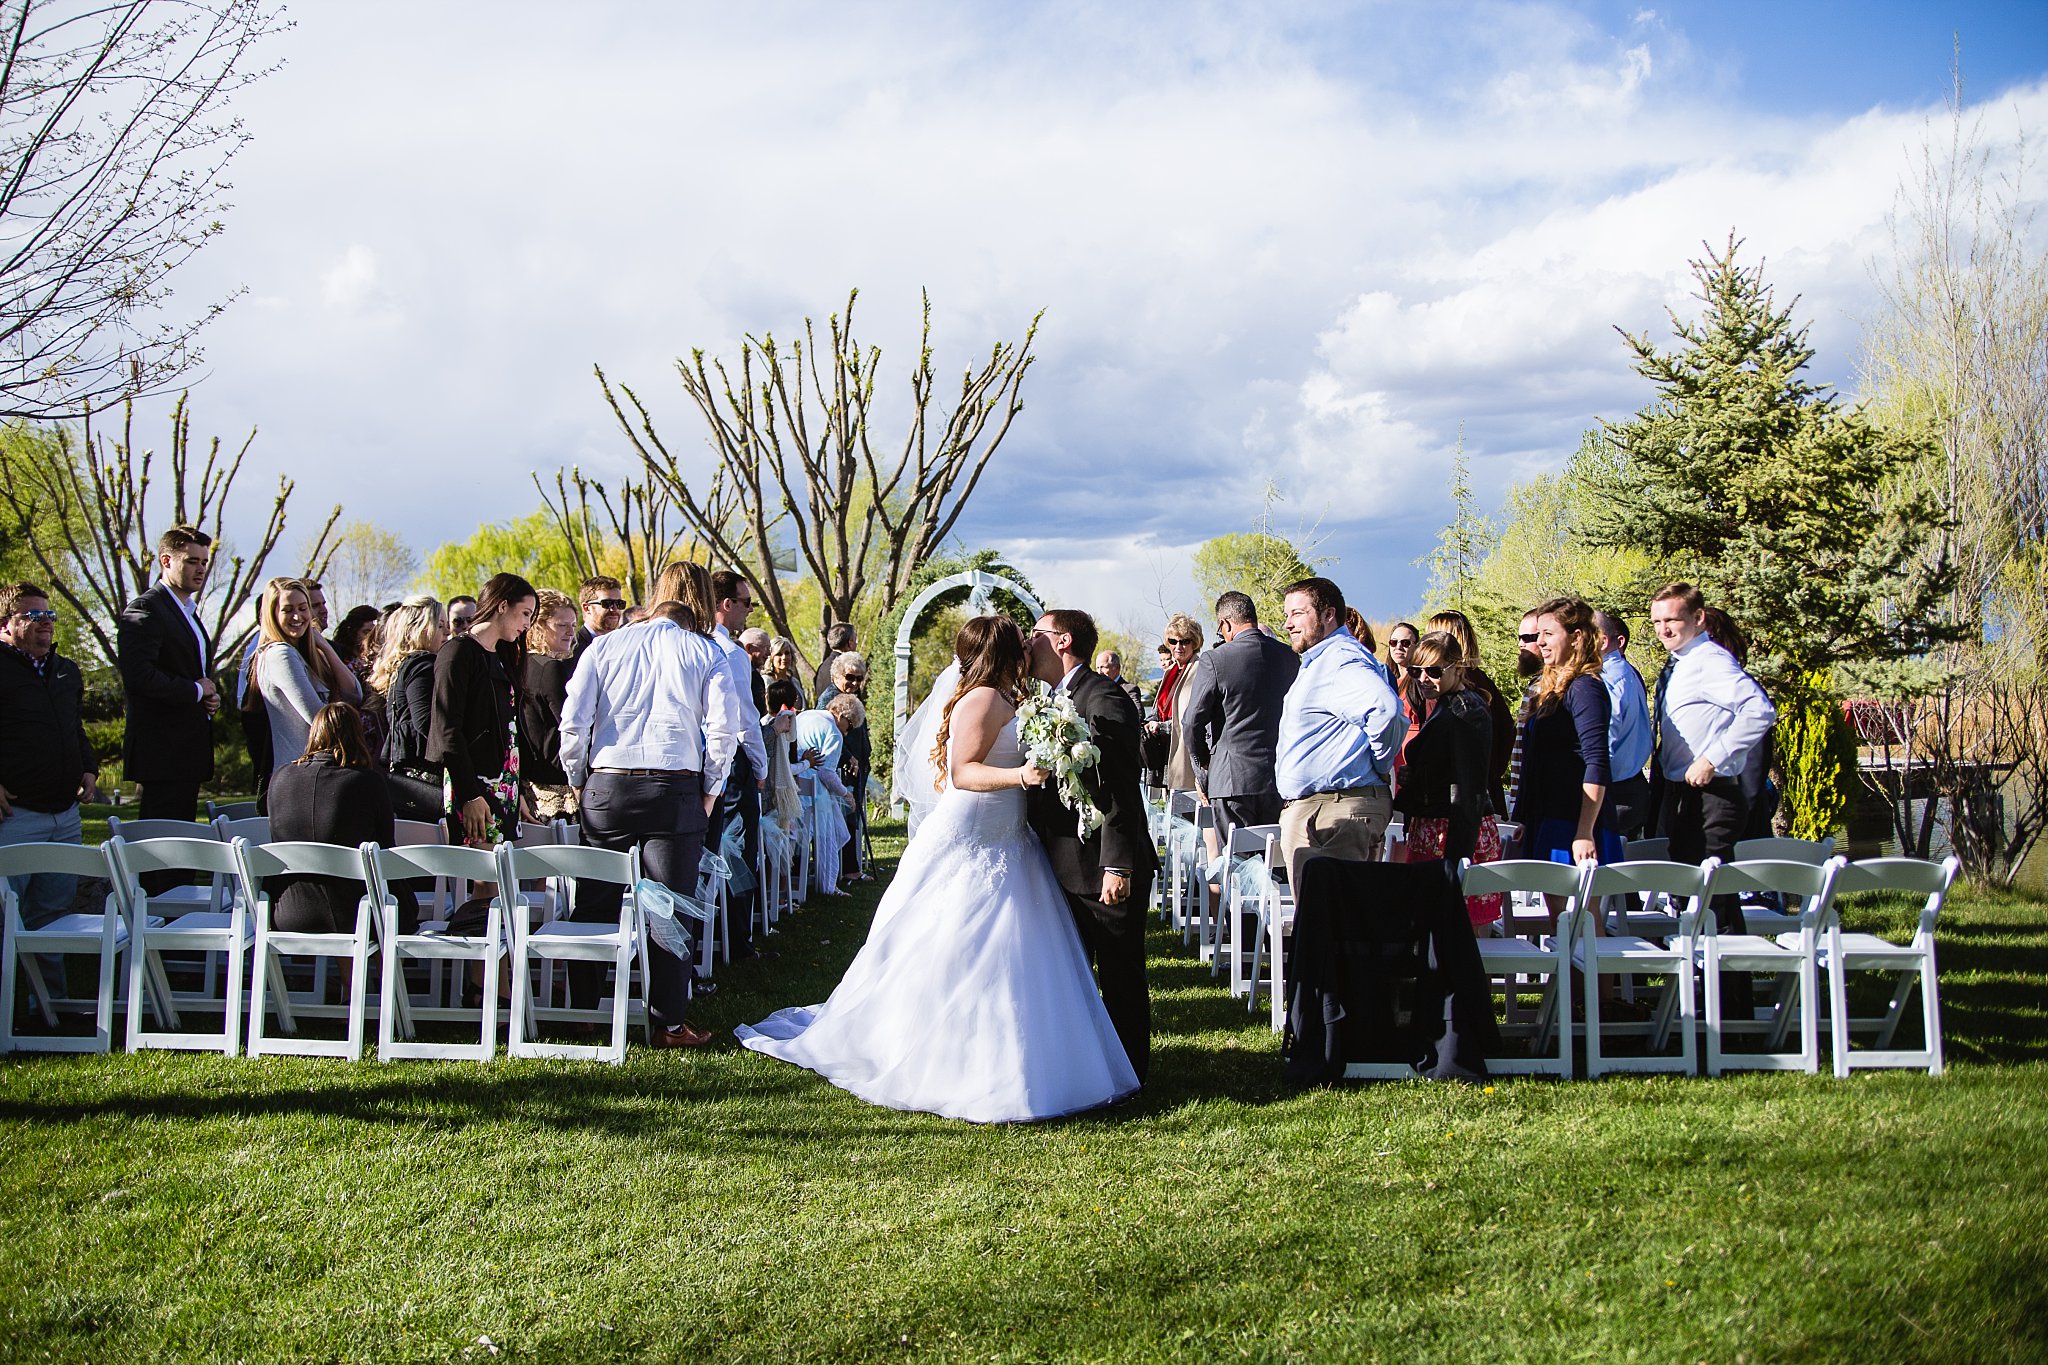 Brianna & Branden's Wedding at Windmill House in Chino Valley, AZ